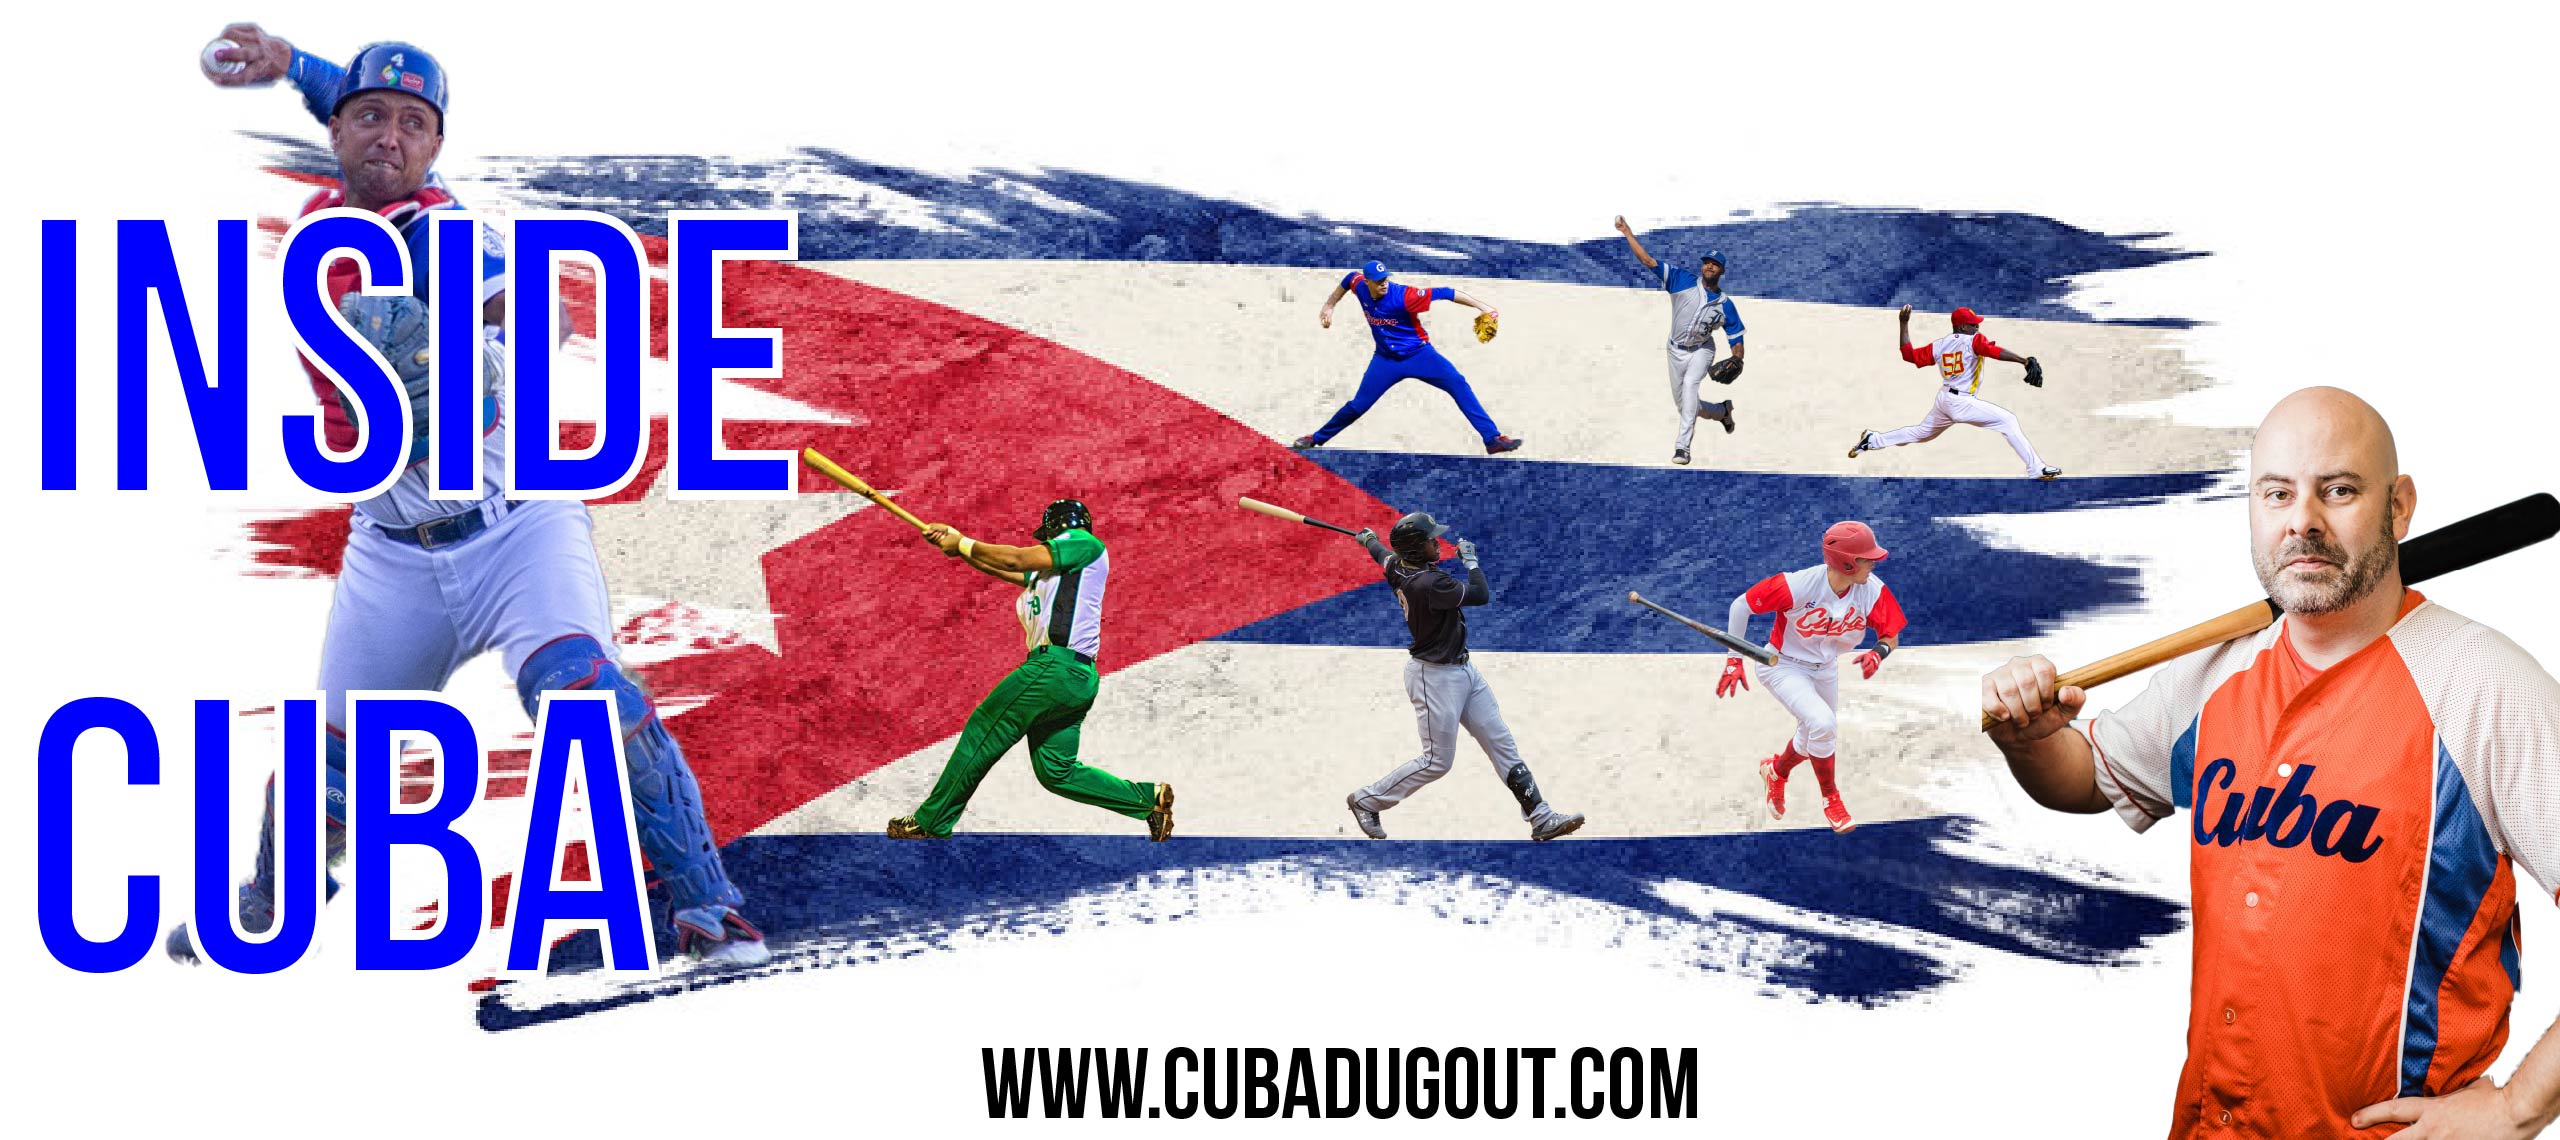 Cuba Dugout